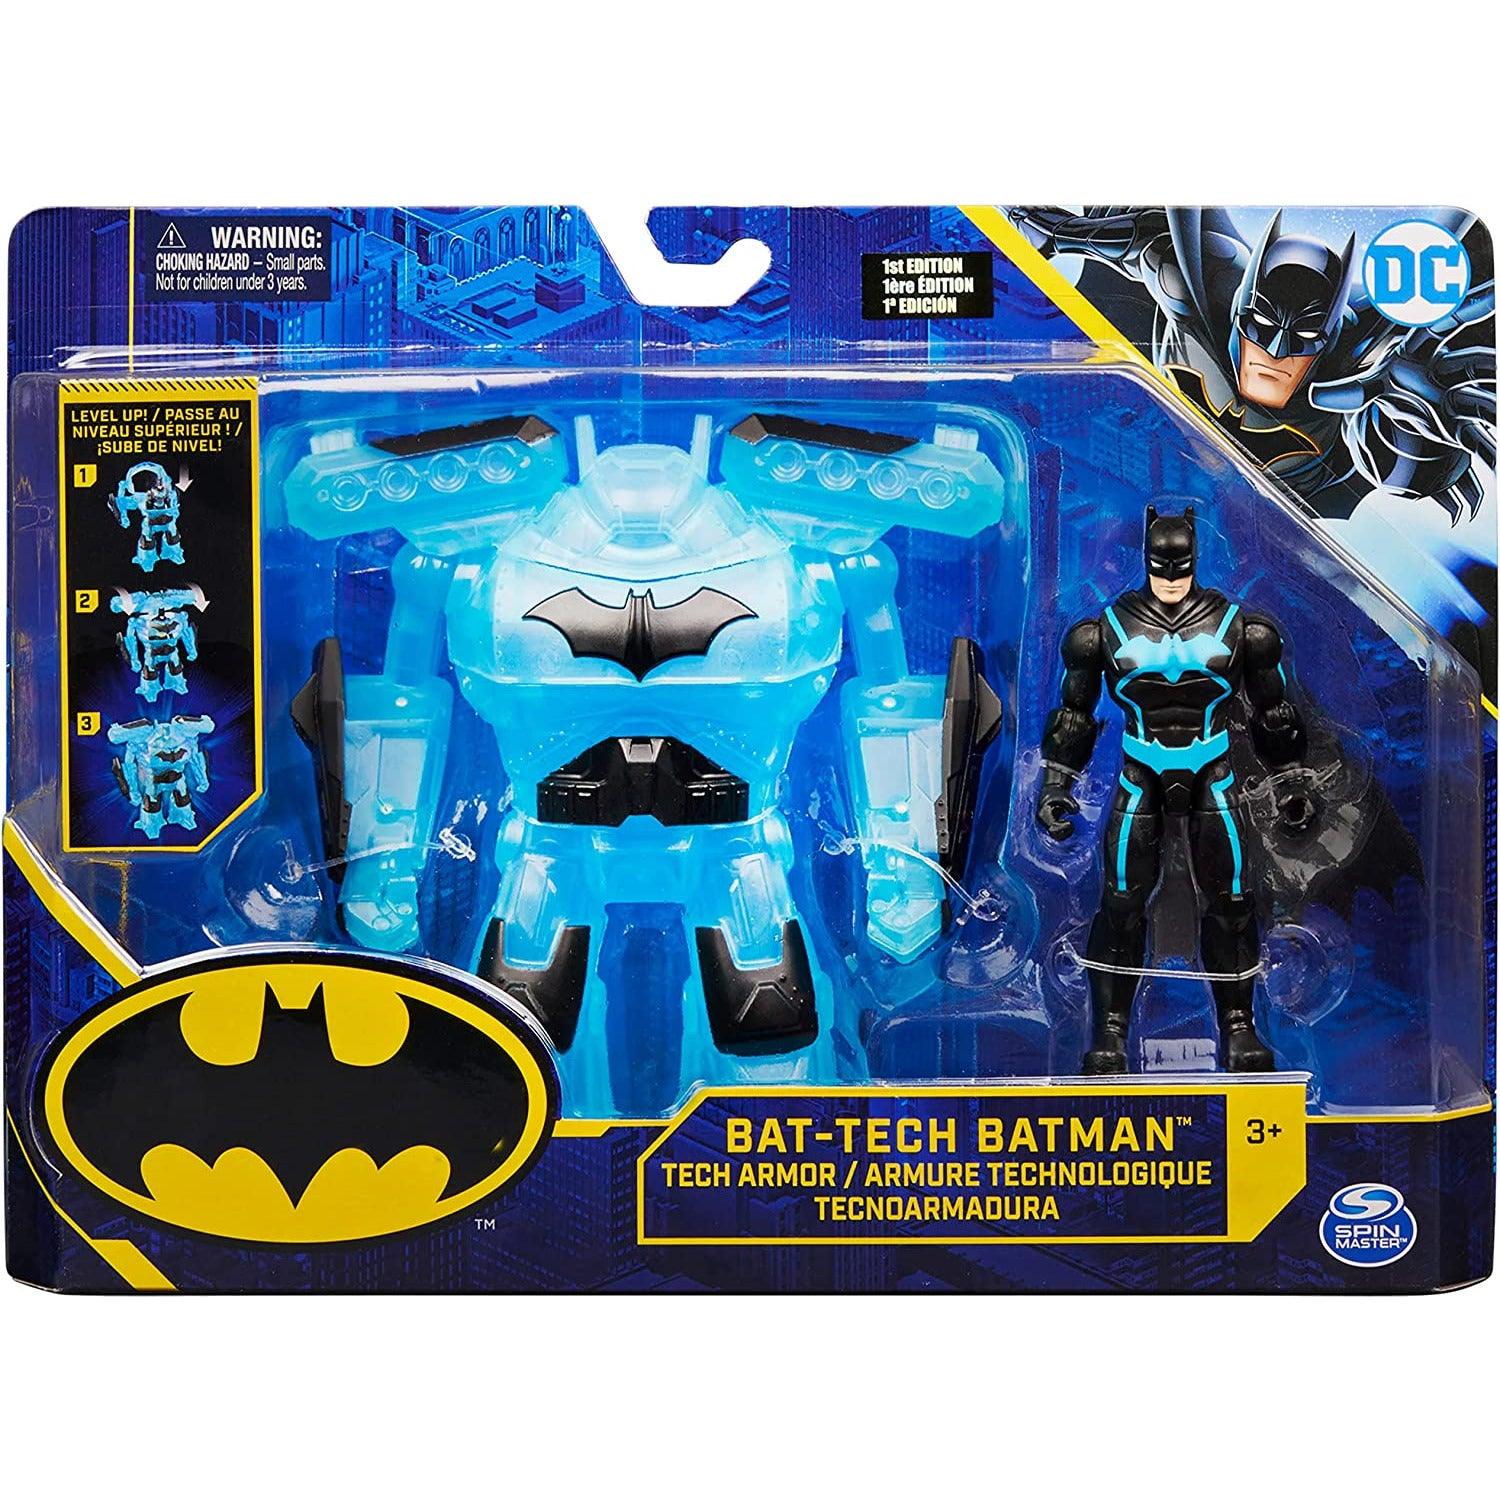 DC Comics Batman Bat-Tech 4-inch Deluxe Action Figure with Transforming Tech Armor